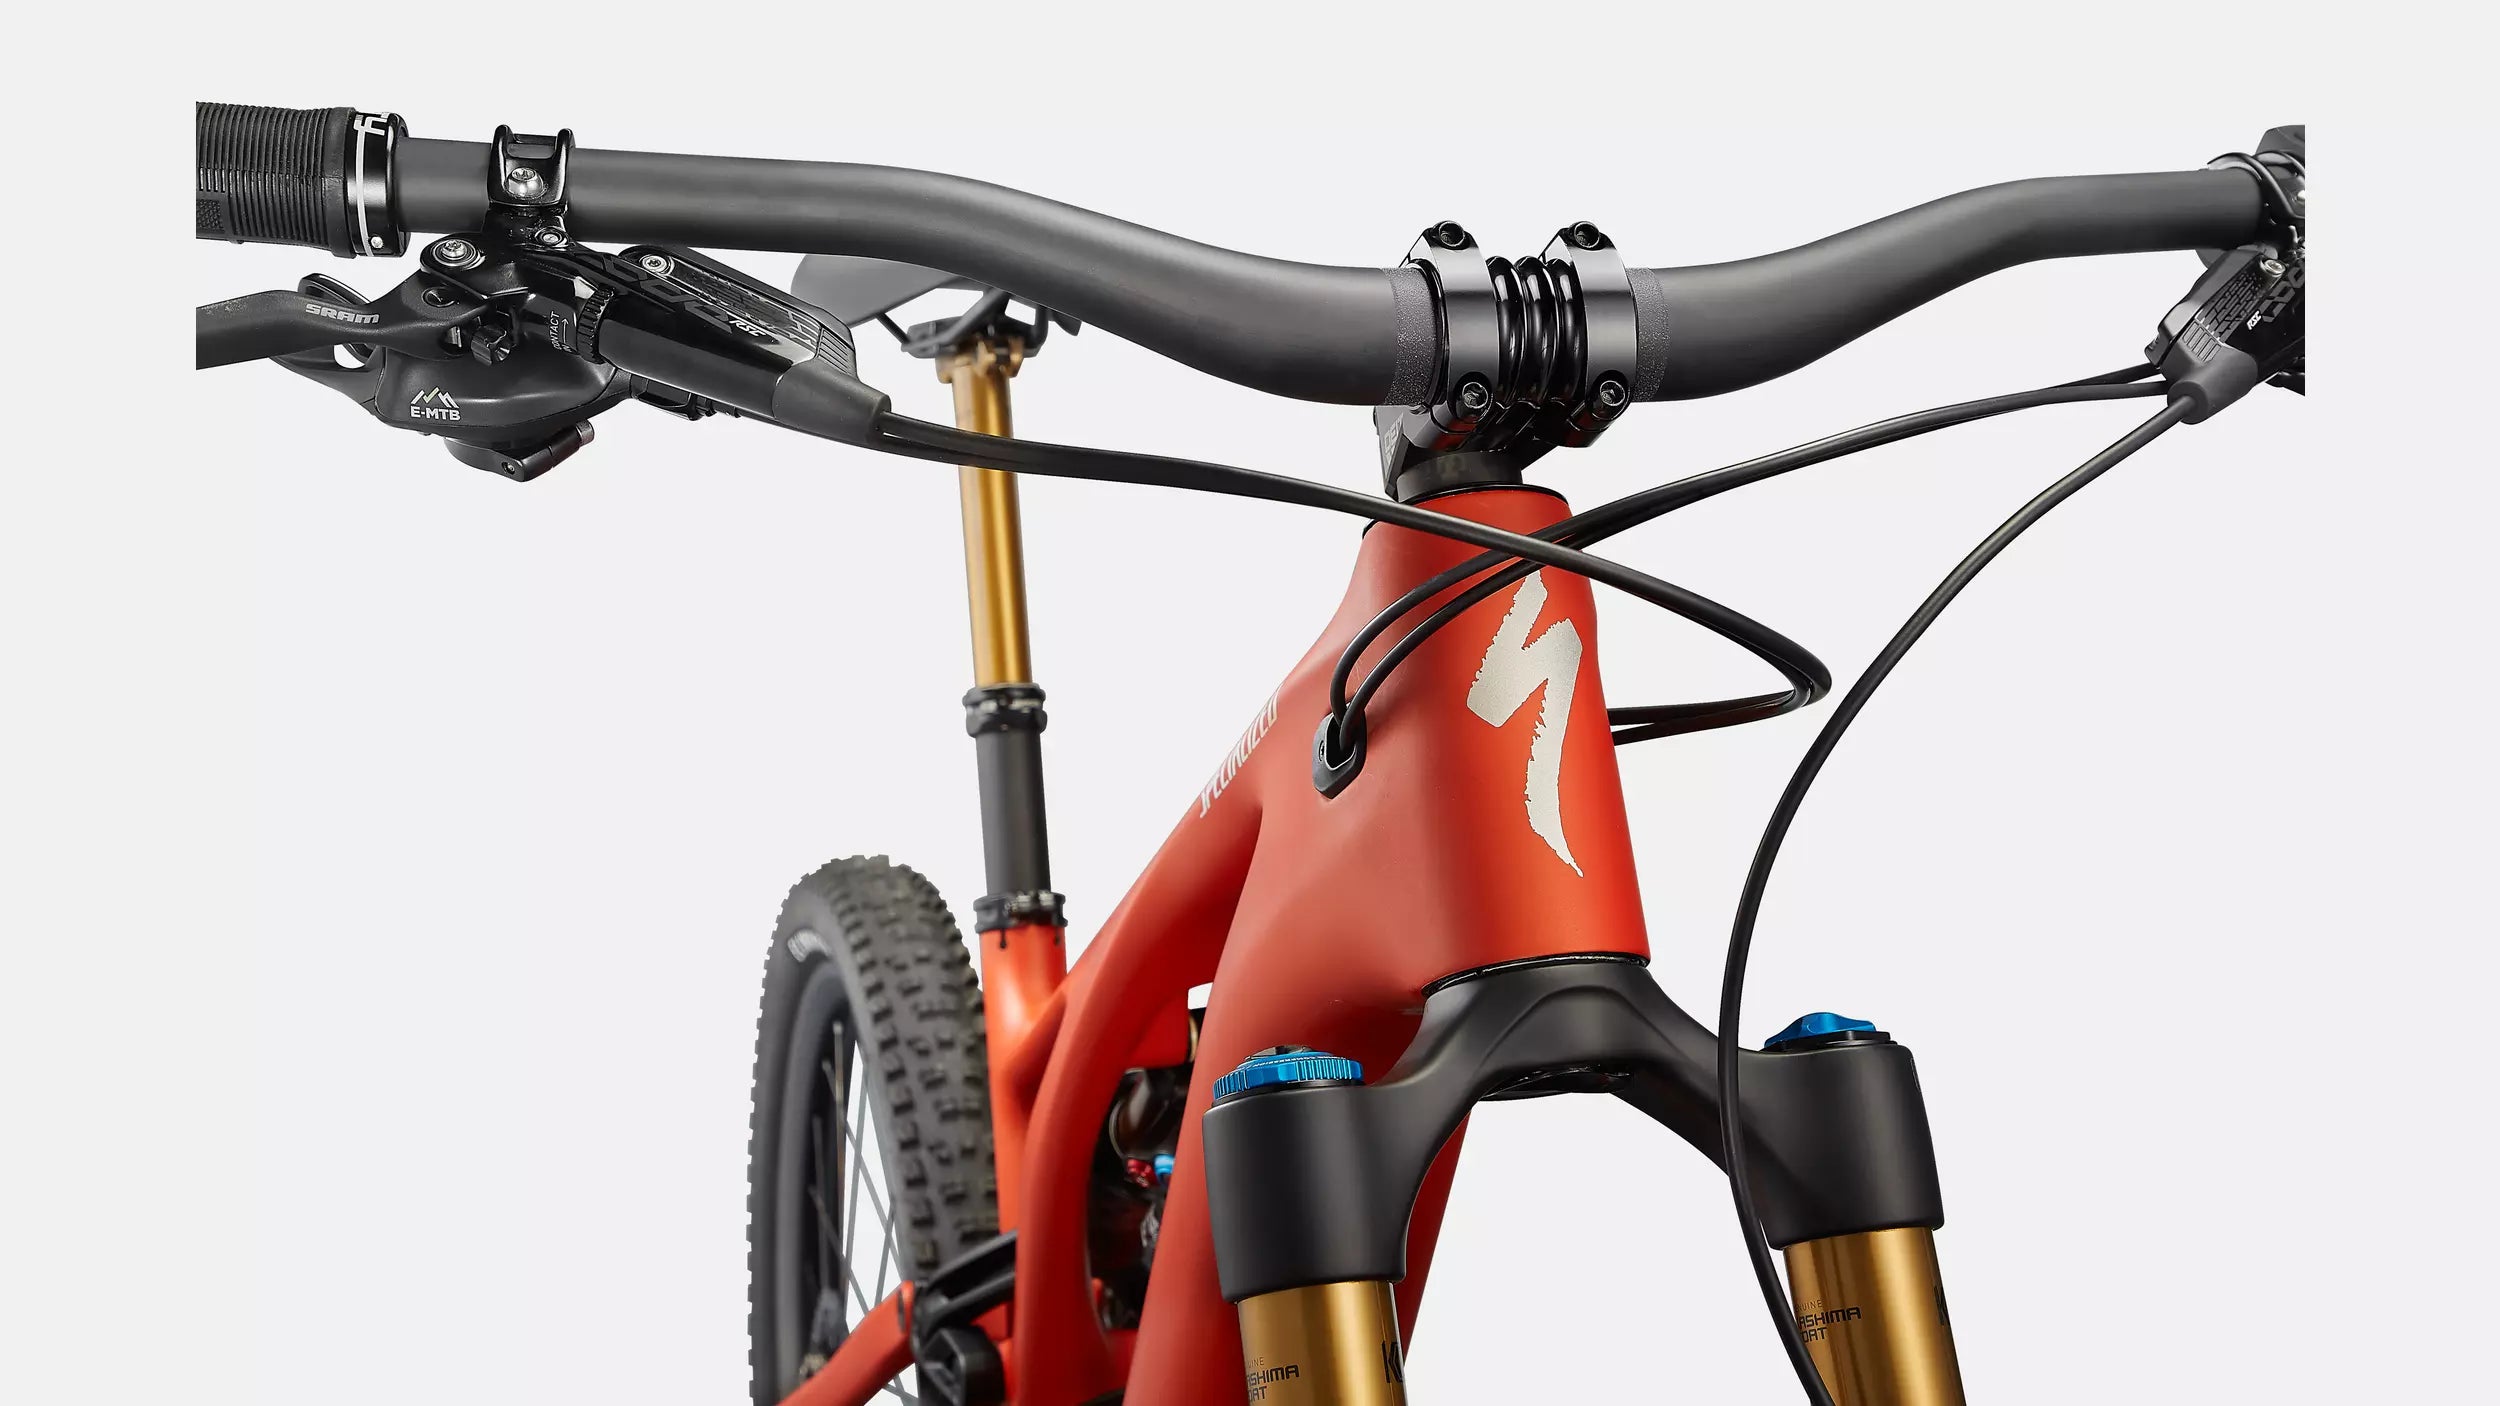 Bicicleta Turbo Levo Pro Carbon, Roja